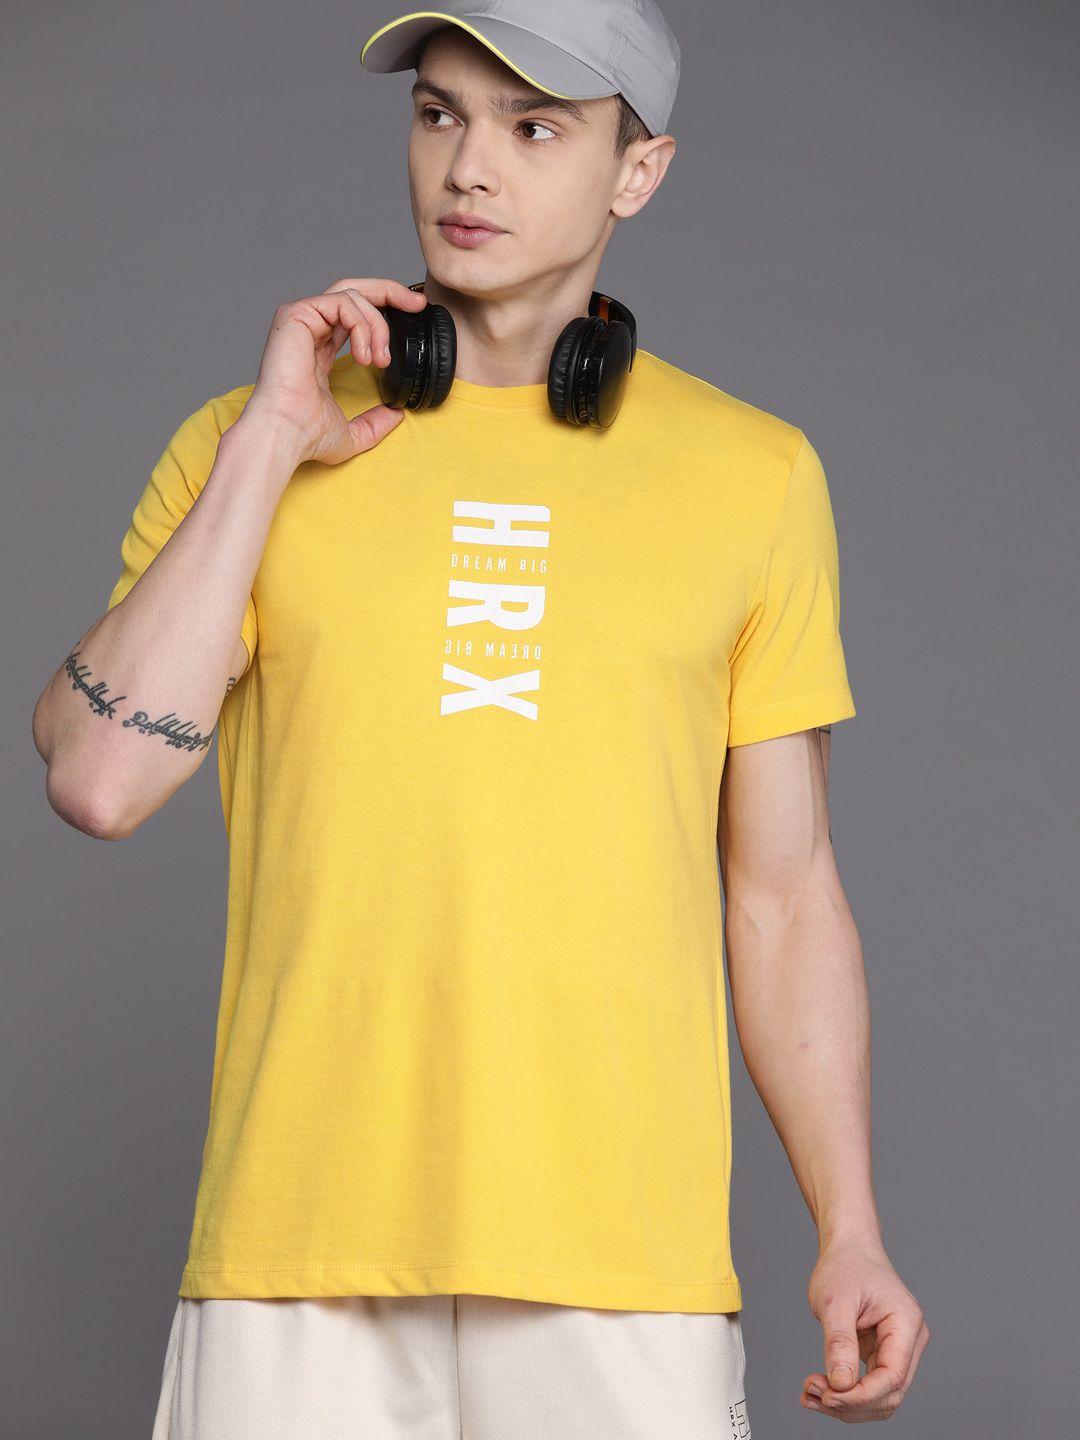 hrx by hrithik roshan brand logo printed lifestyle t-shirt